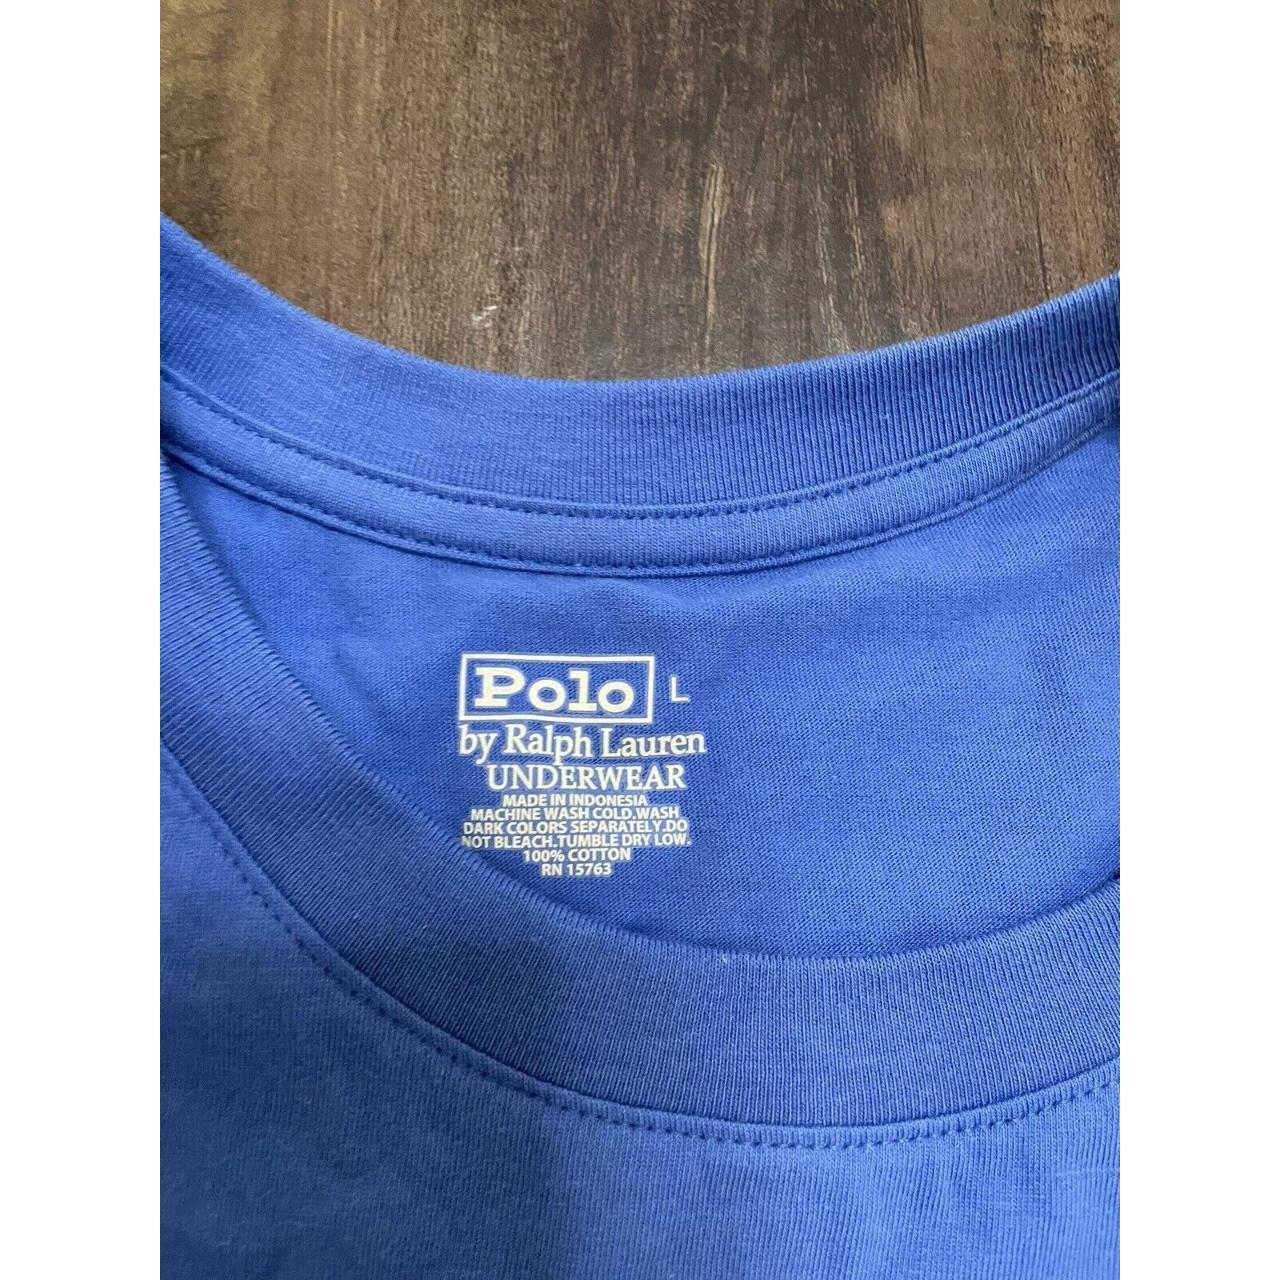 Polo By Ralph Lauren Size Large Short Sleeve... - Depop